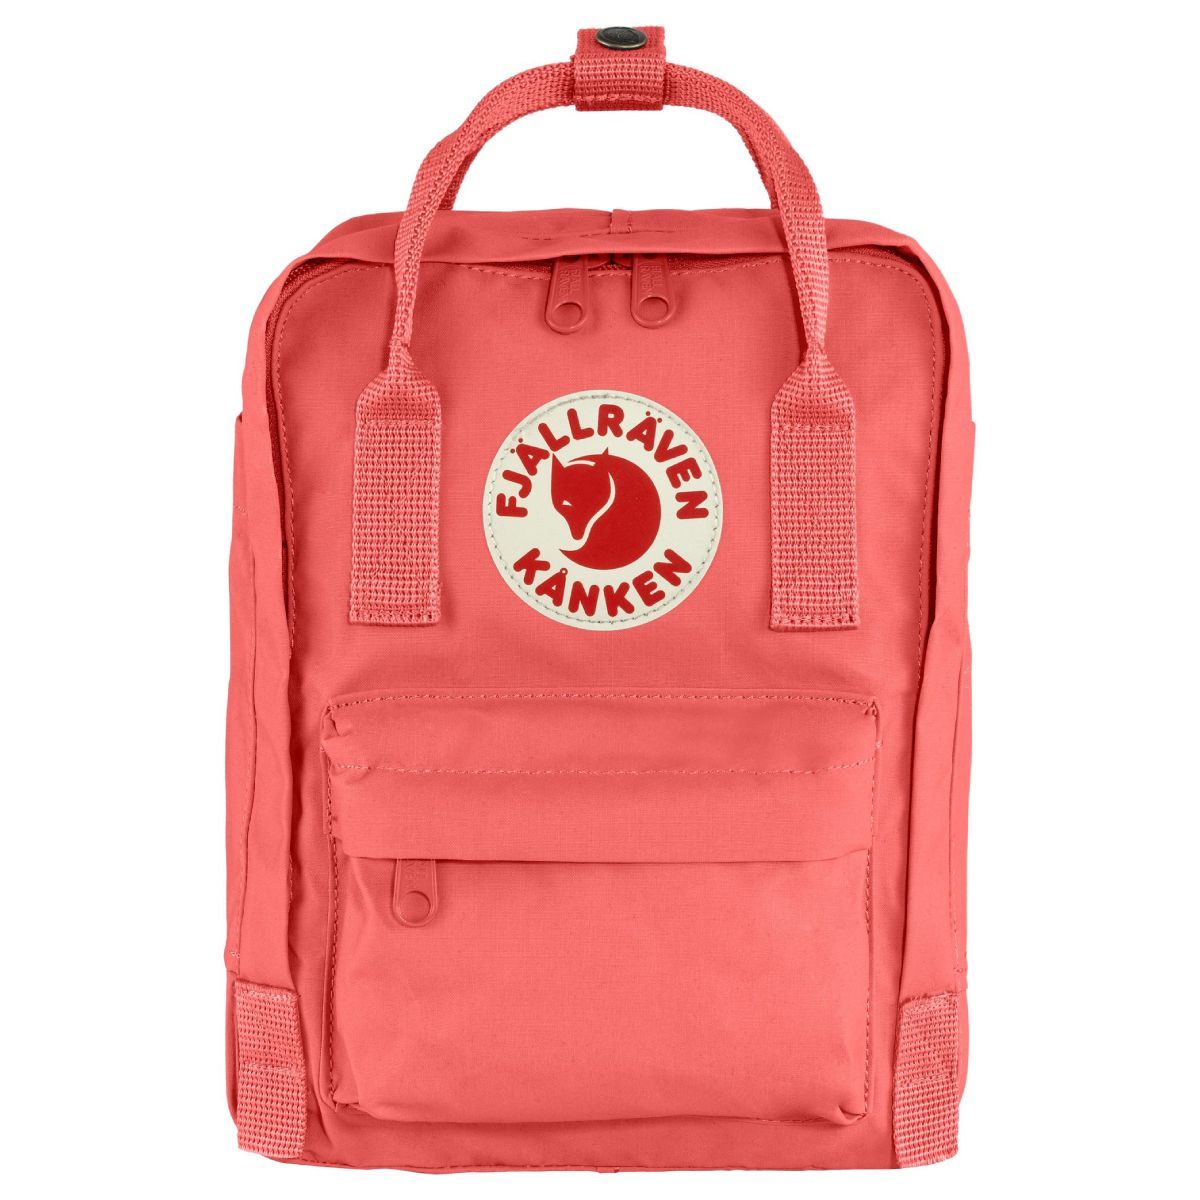 Міський рюкзак Fjallraven Kanken Mini Peach Pink 7 л 23561.319